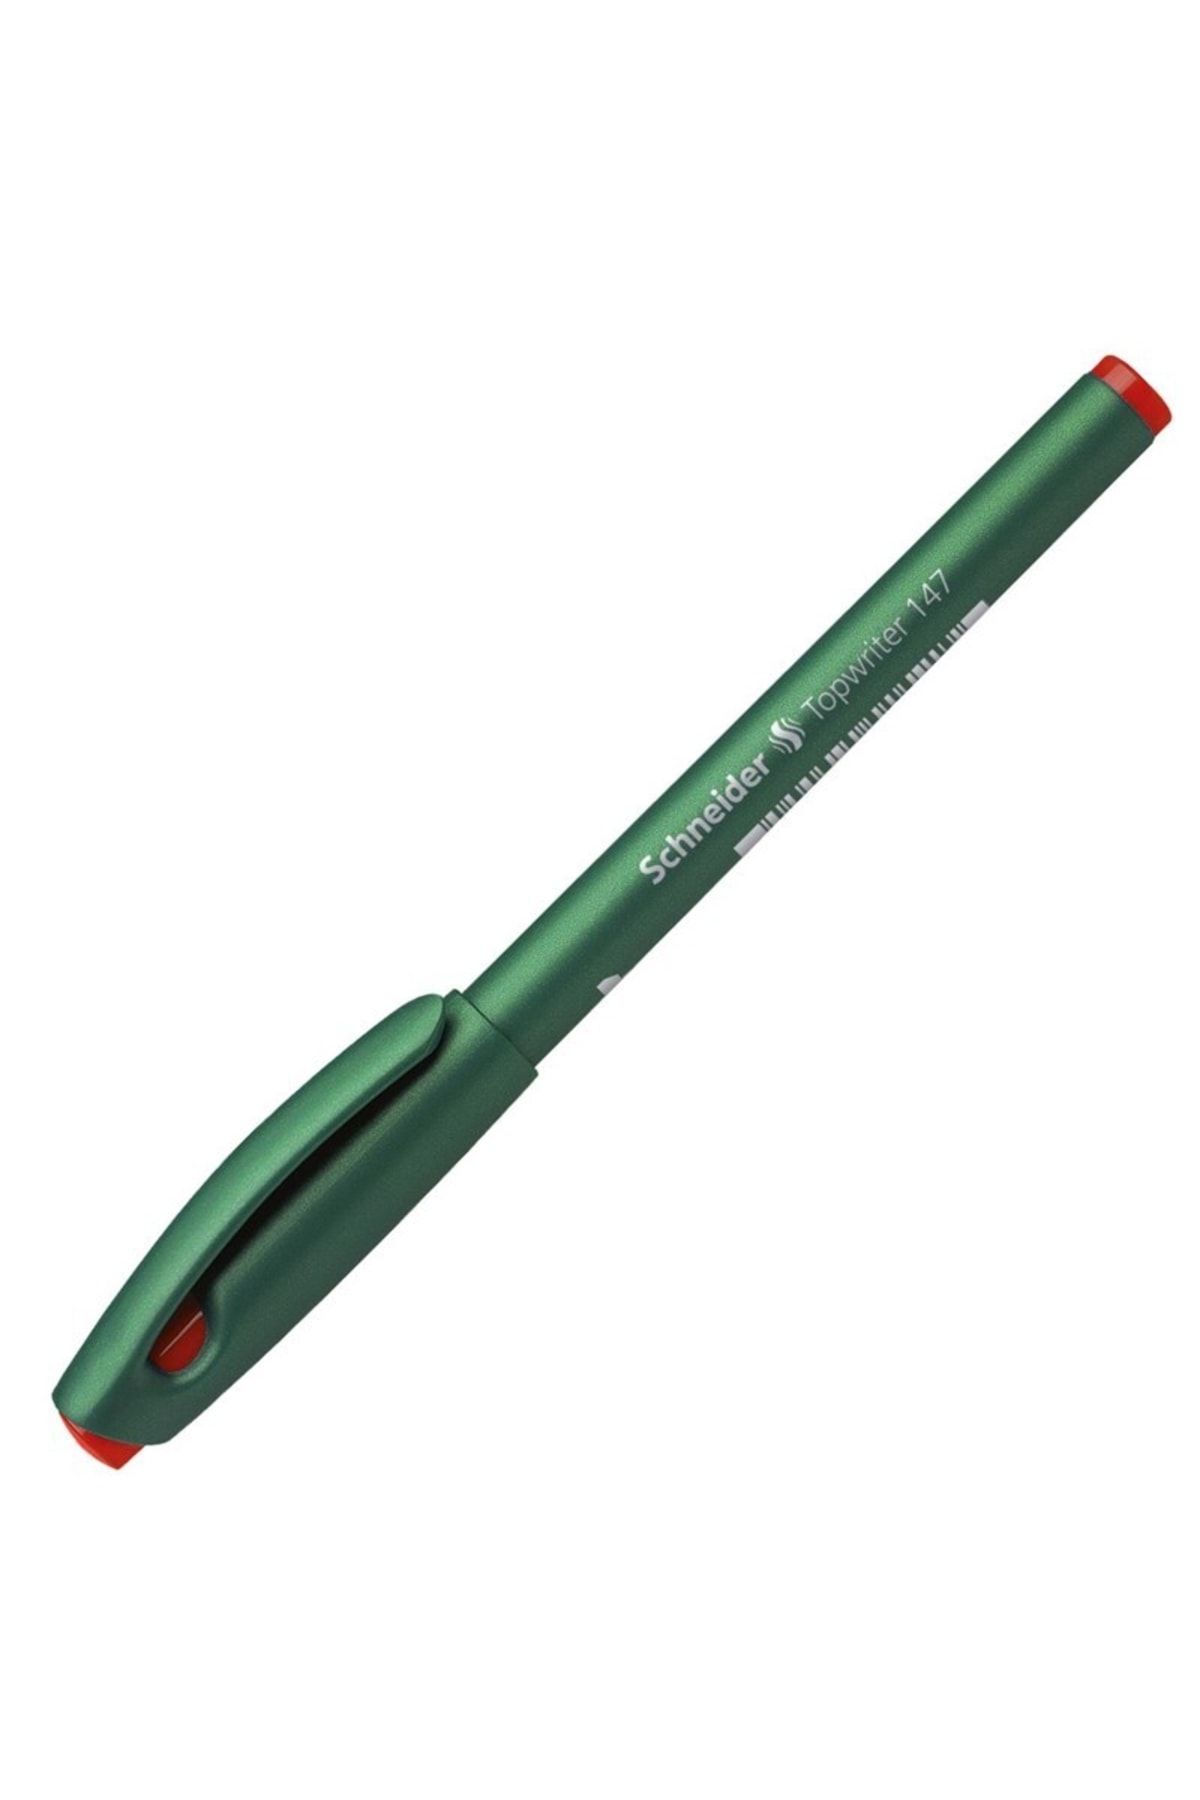 Schneider Pen Schneıder Topwrıter Fiber Uçlu Kalem 147 Kırmızı 0,6 Mm 1472 Scr057